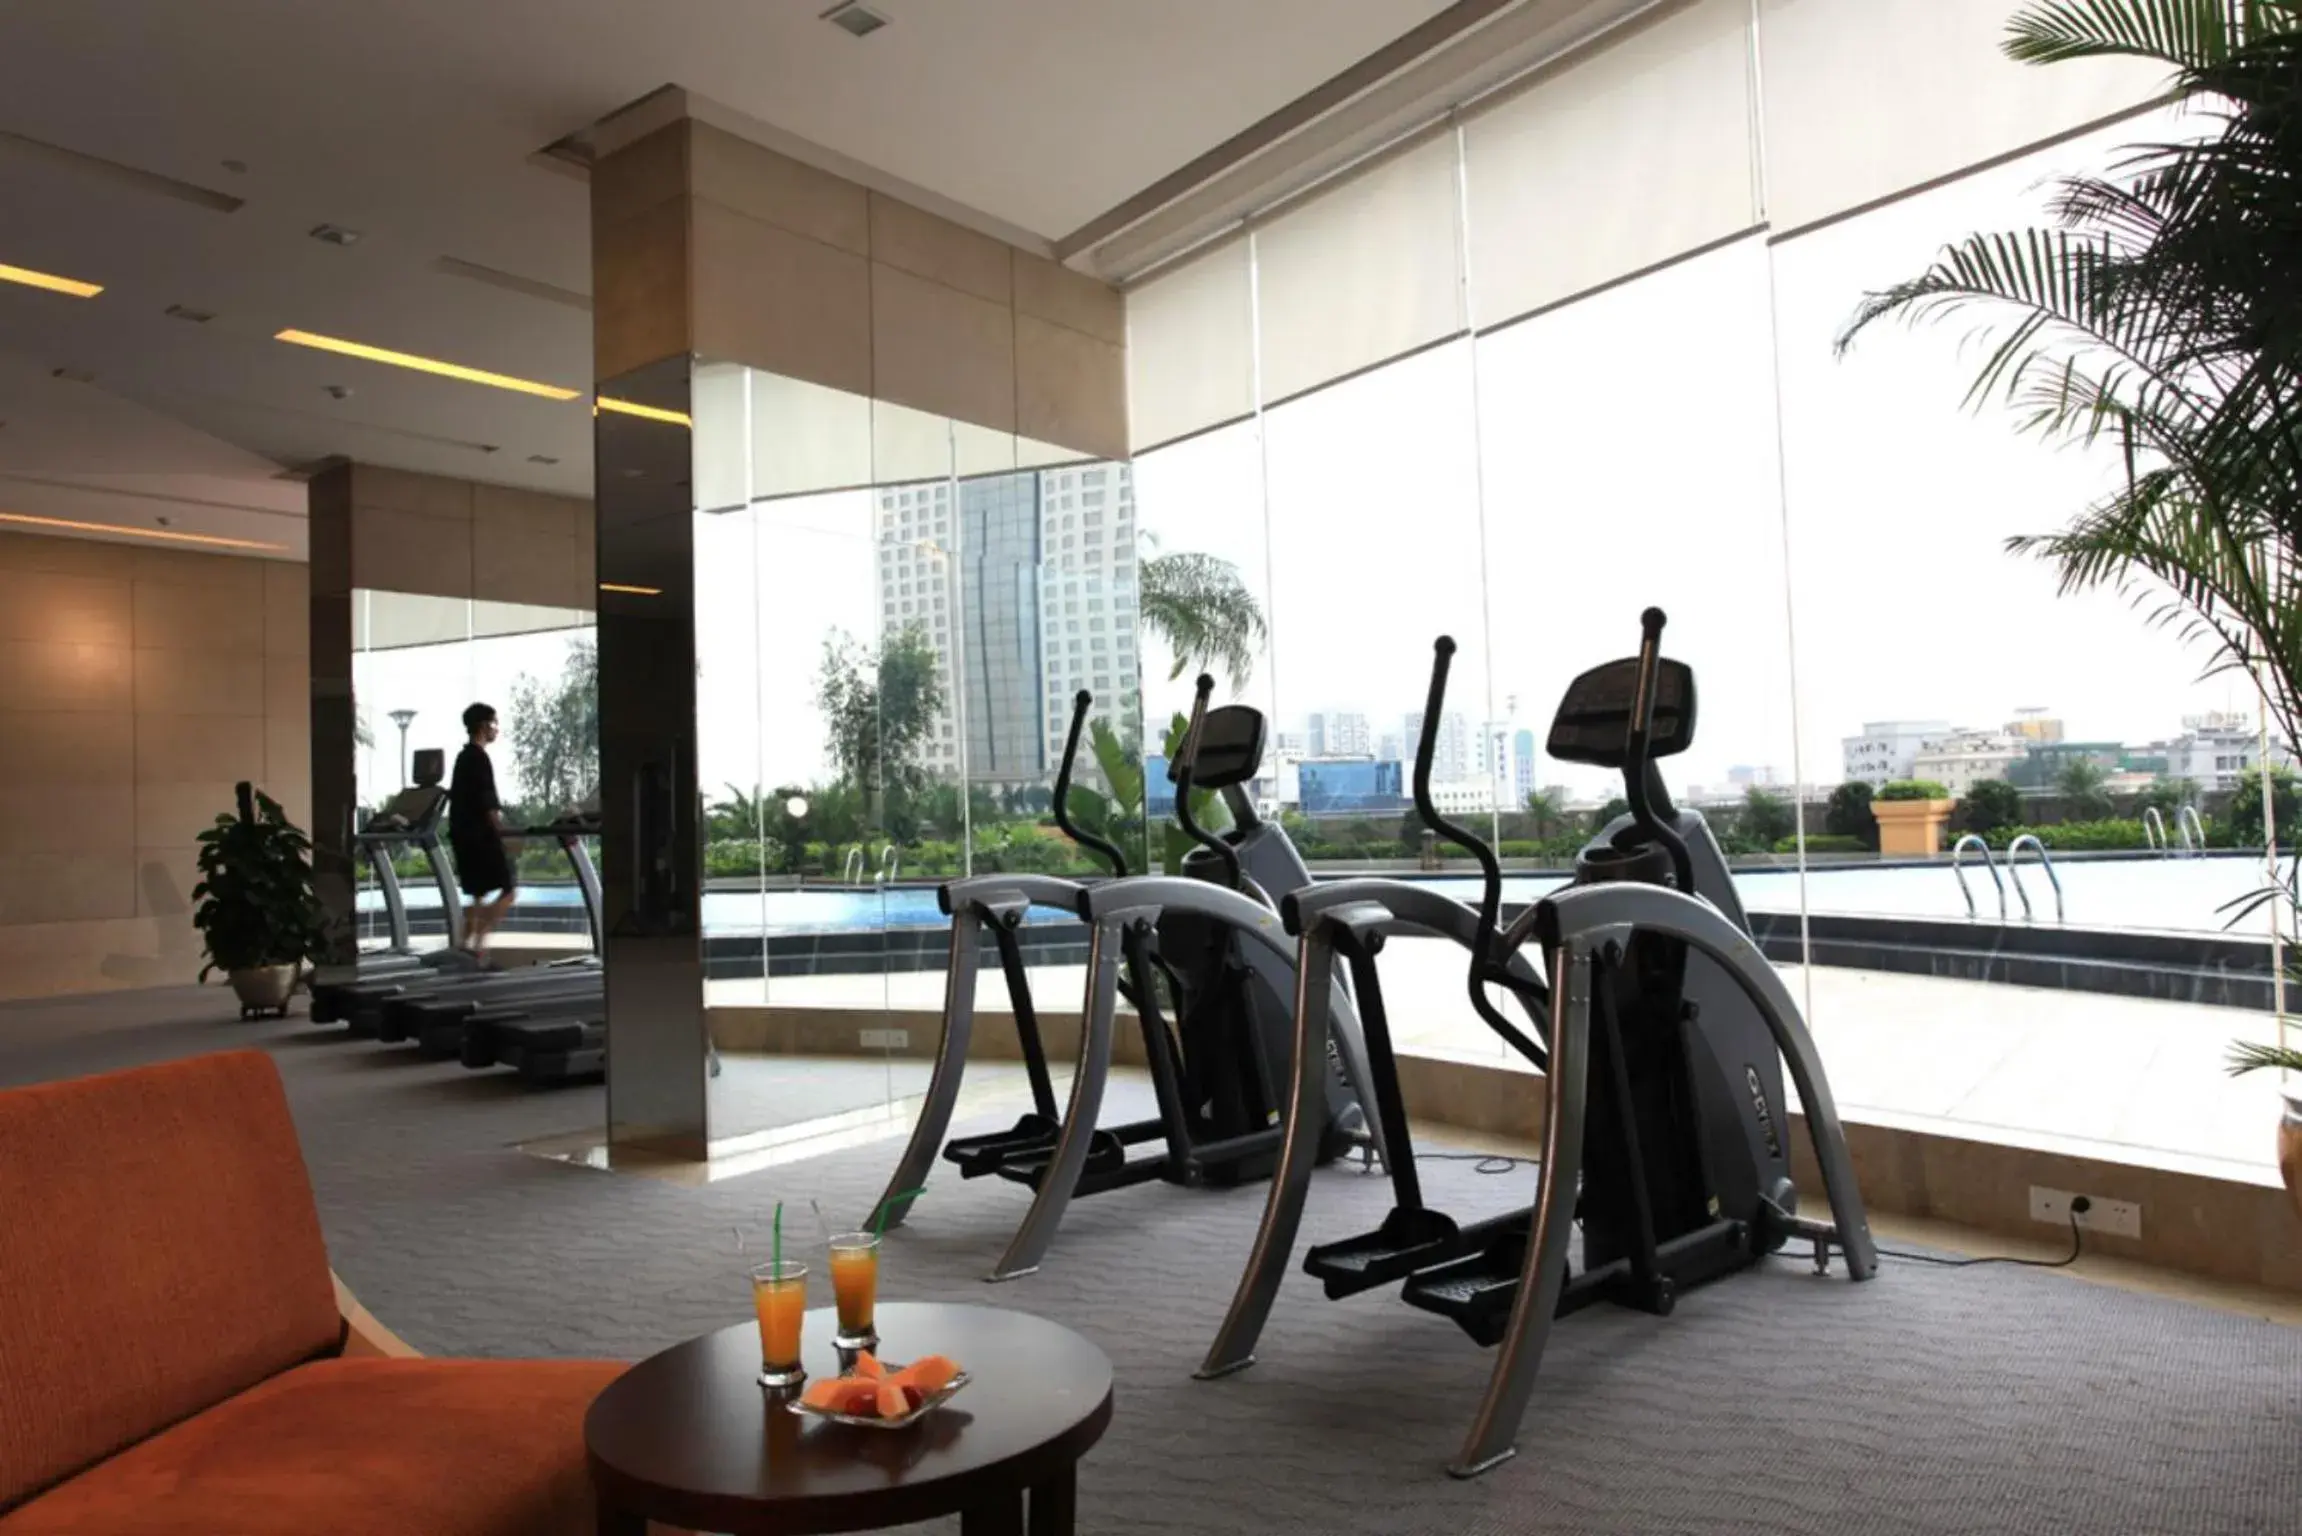 Fitness centre/facilities, Fitness Center/Facilities in HJ International Hotel